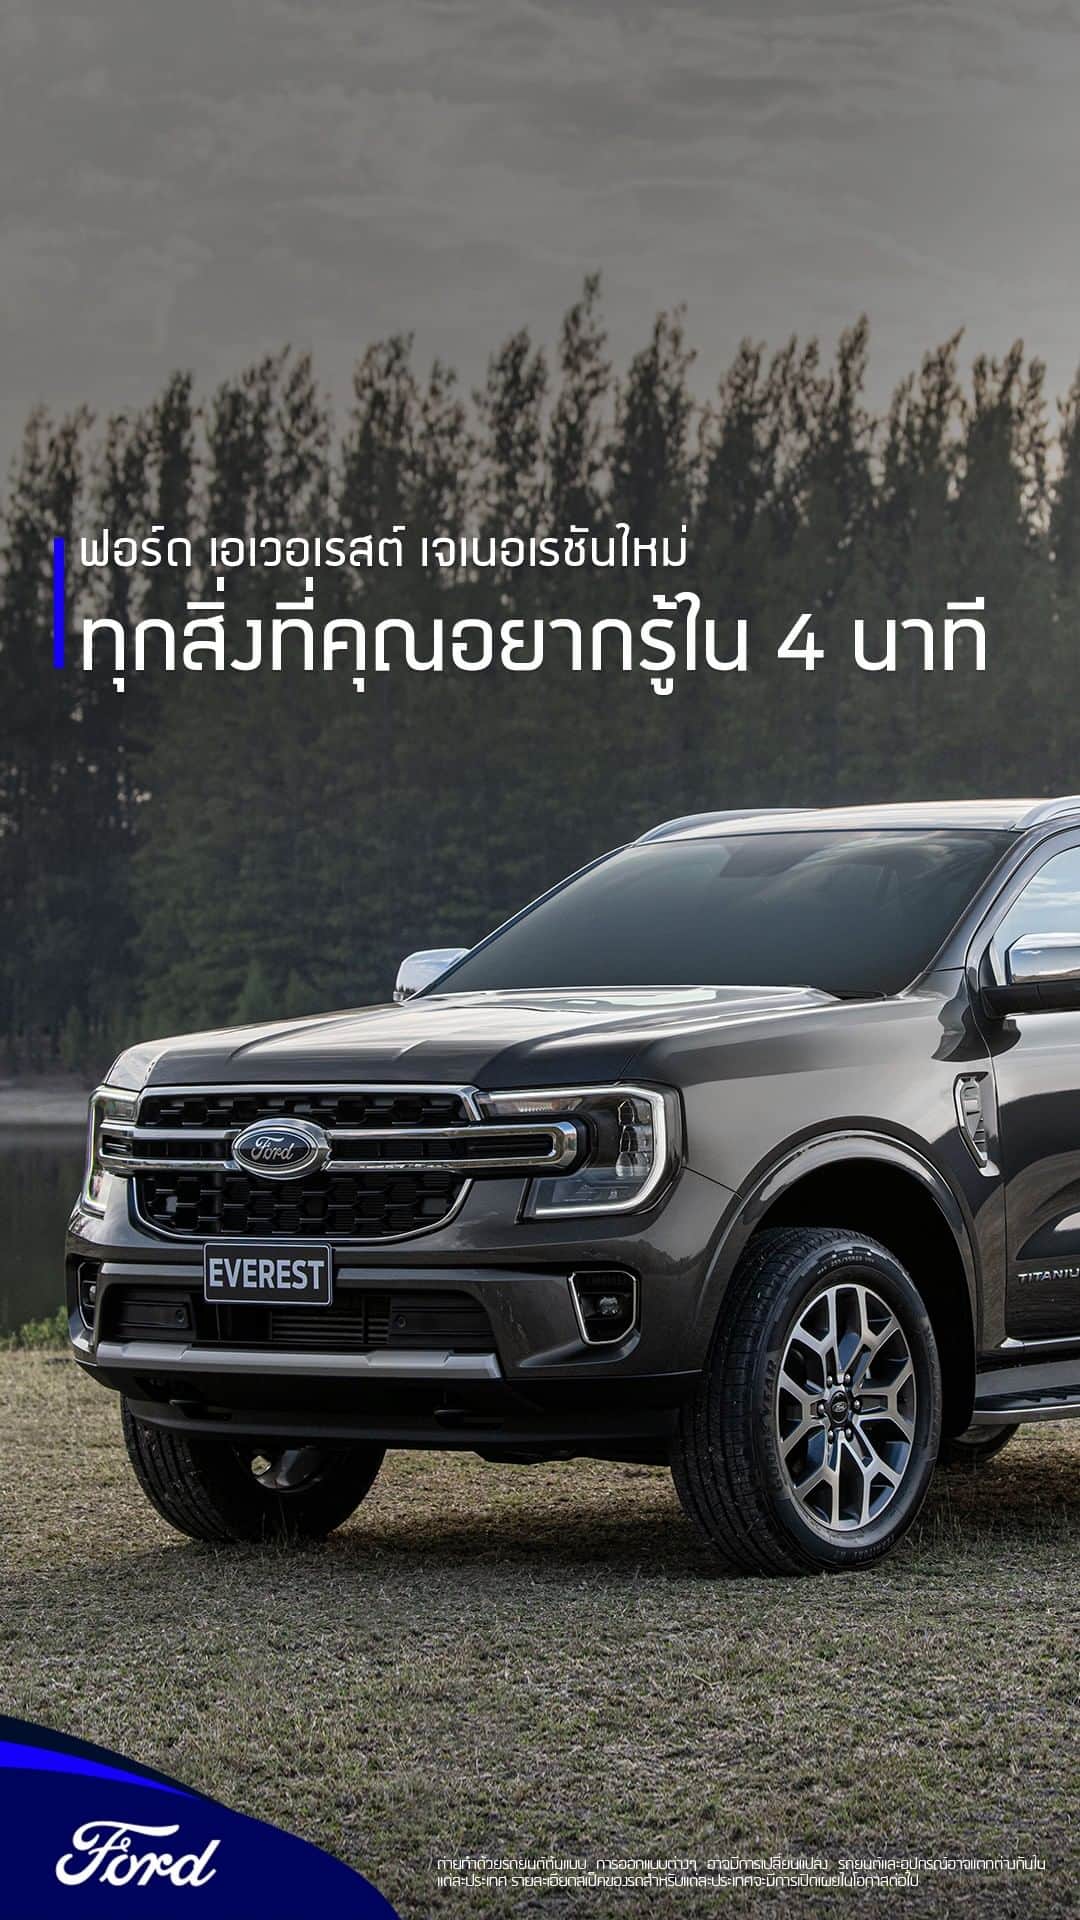 Ford Thailandのインスタグラム